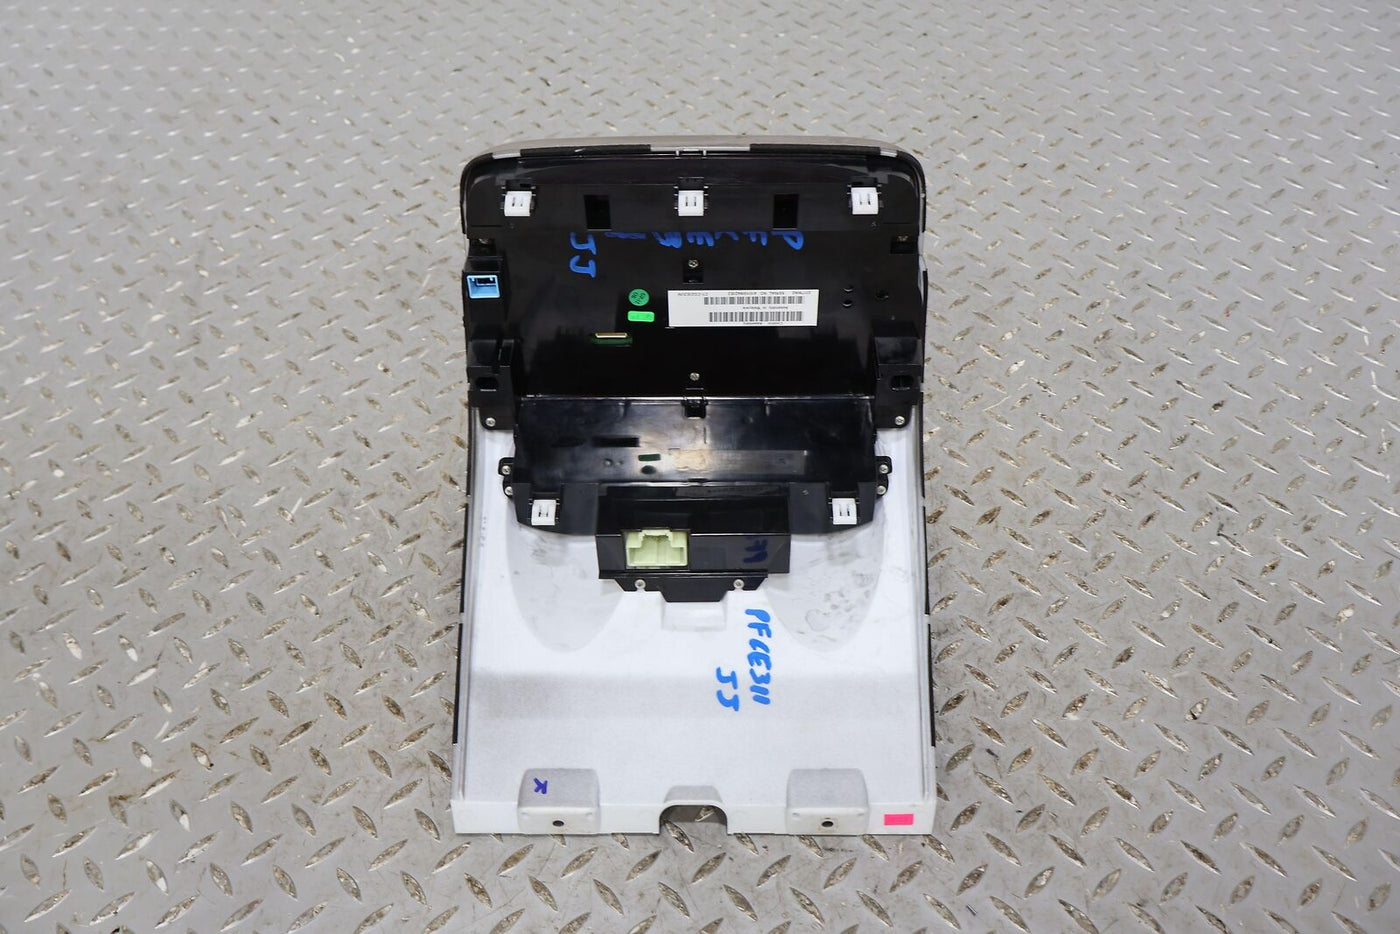 13-15 Chevy Camaro Navi Radio Receiver & Heater Control Panel W/ Screen (Tested)